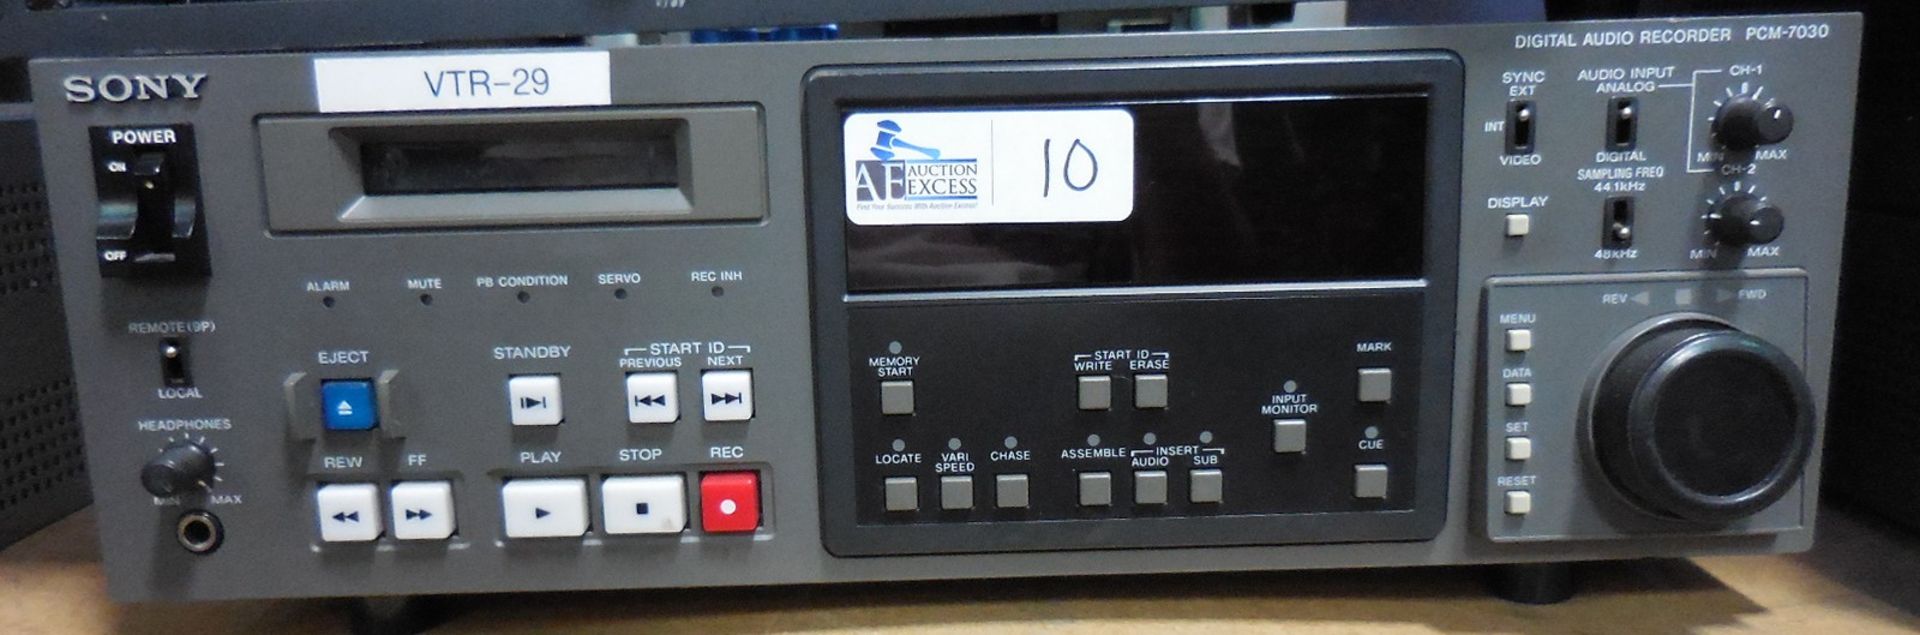 Sony PCM-7030